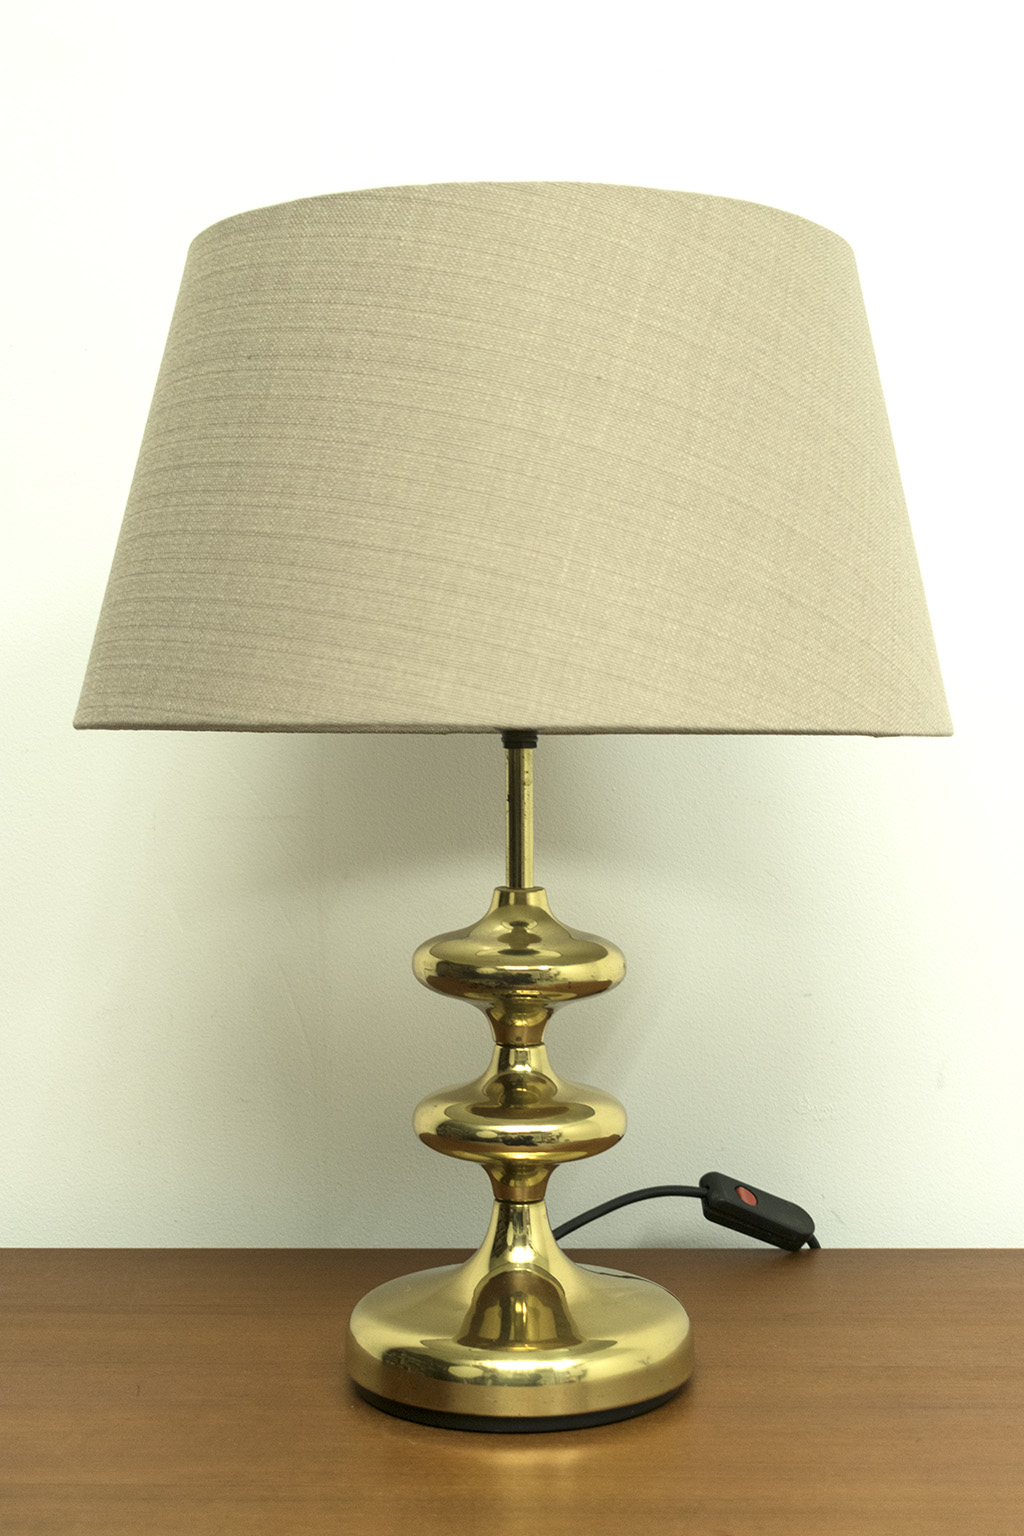 Stylish brass table lamp